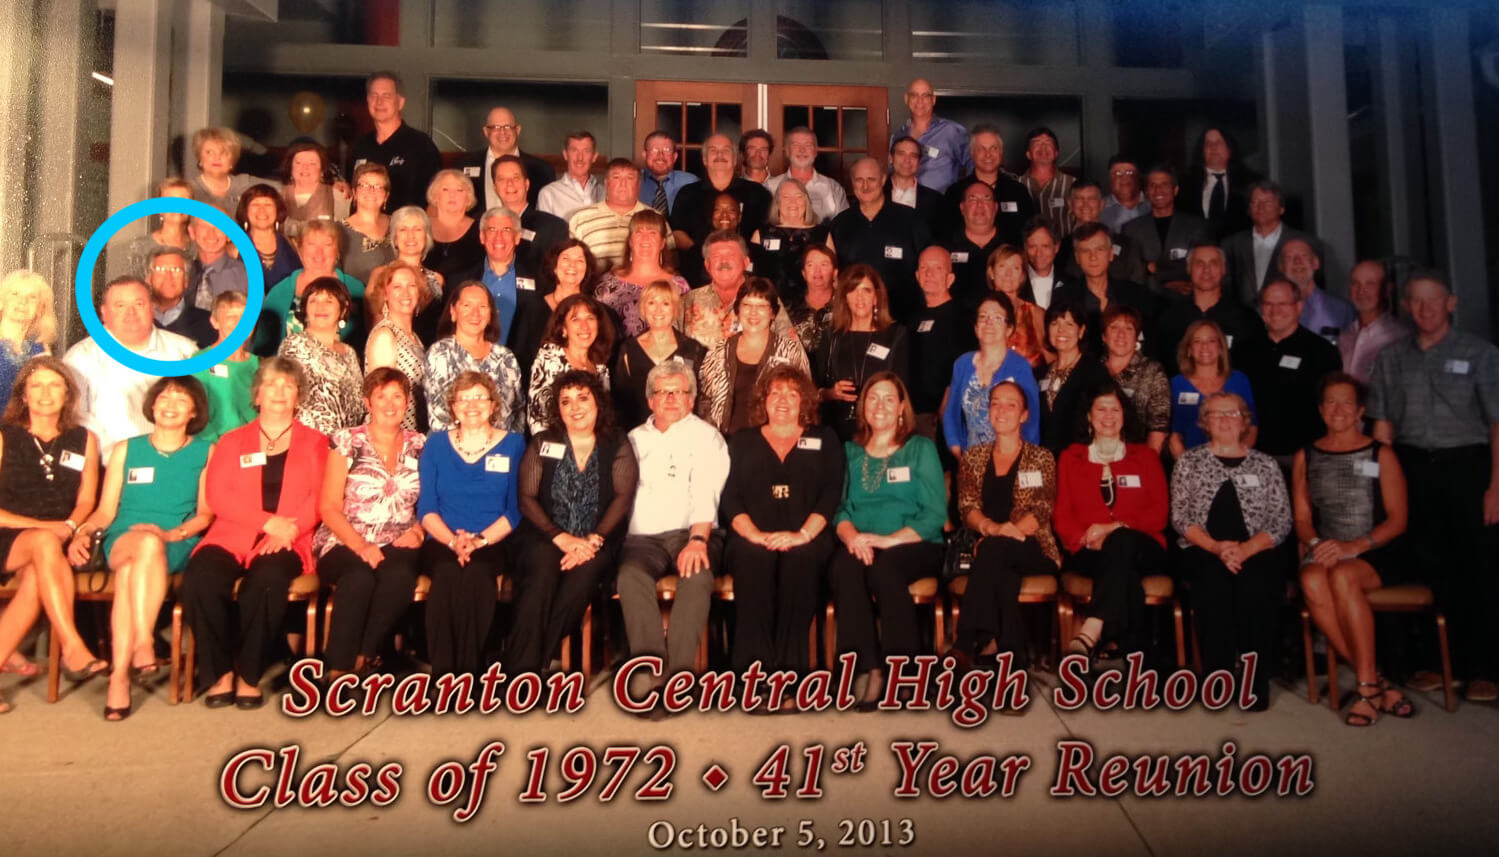 Paul Kessler, circled, in dark sweater, at a Scranton Central High School class reunion in 2013.